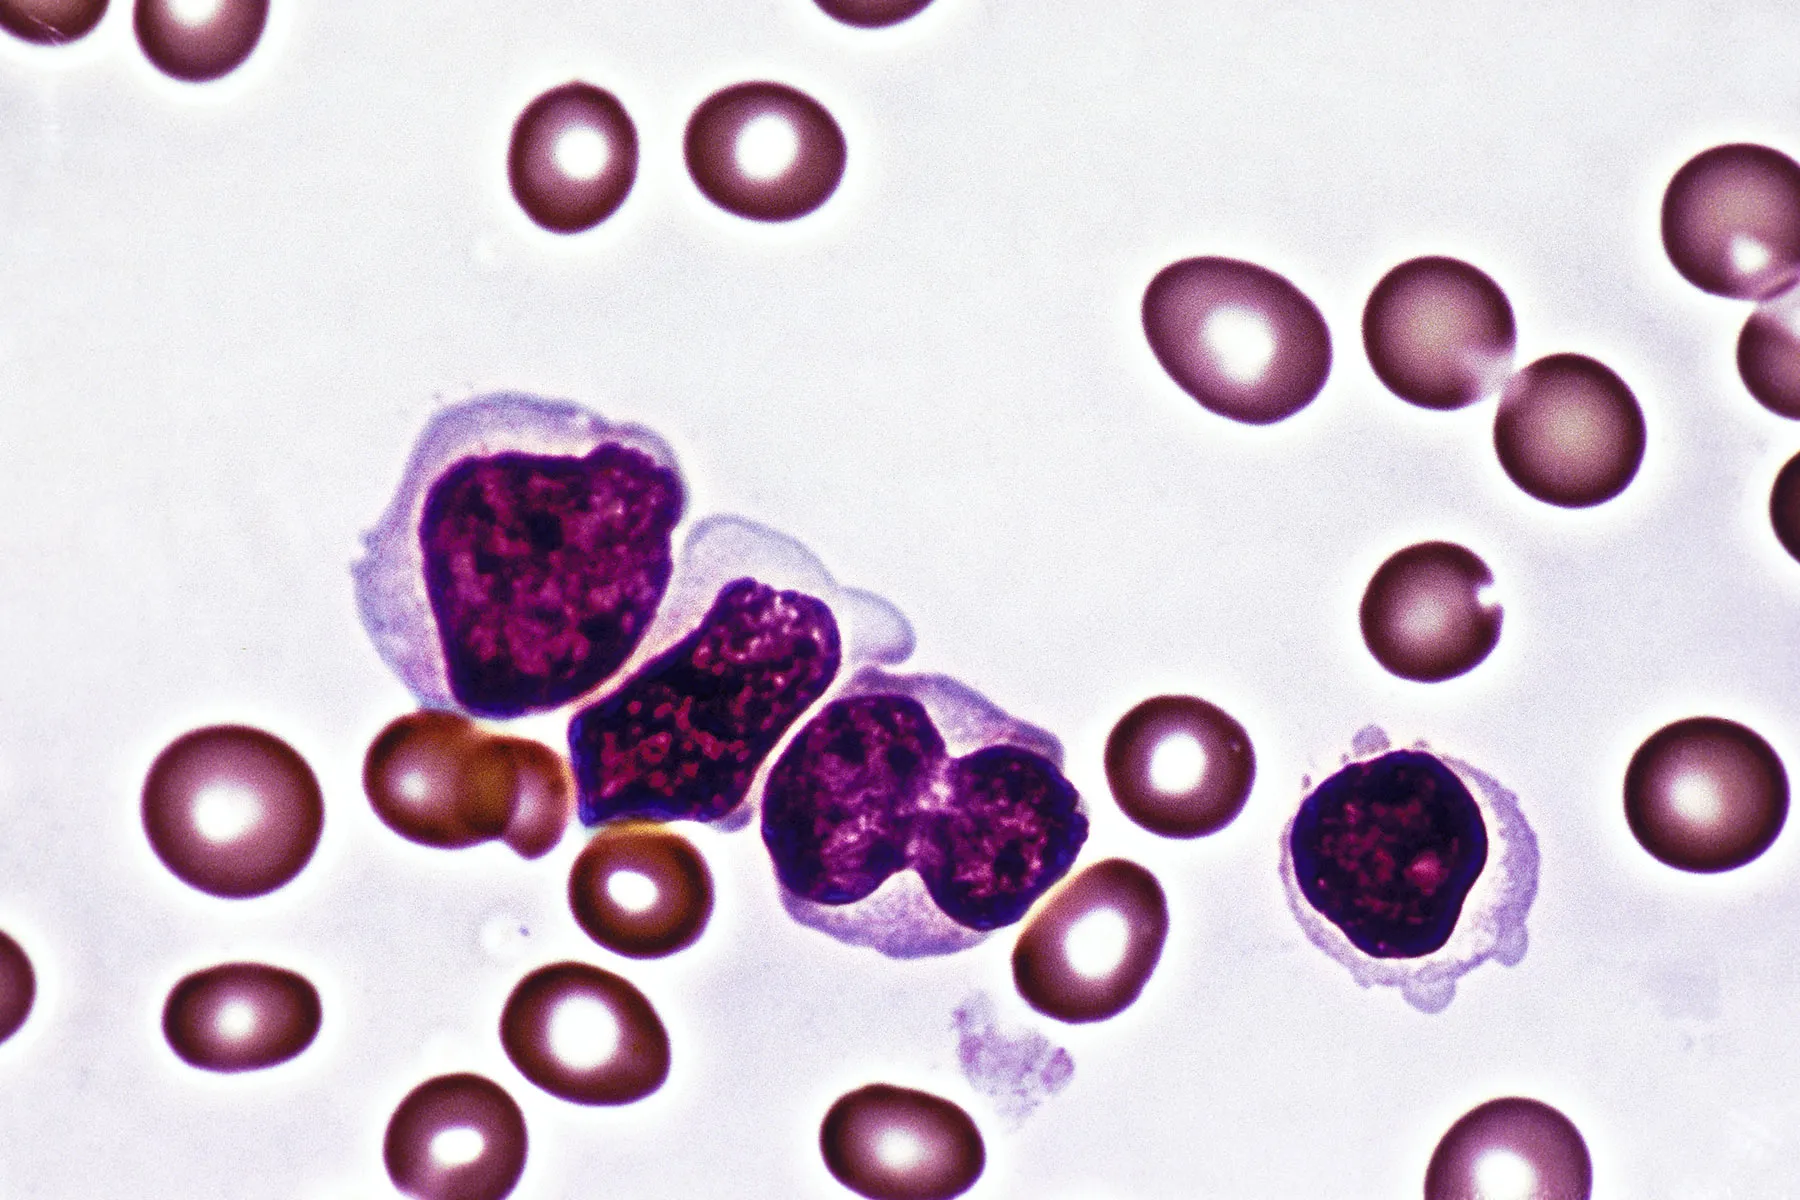 lymphocytic leukemia micrograph